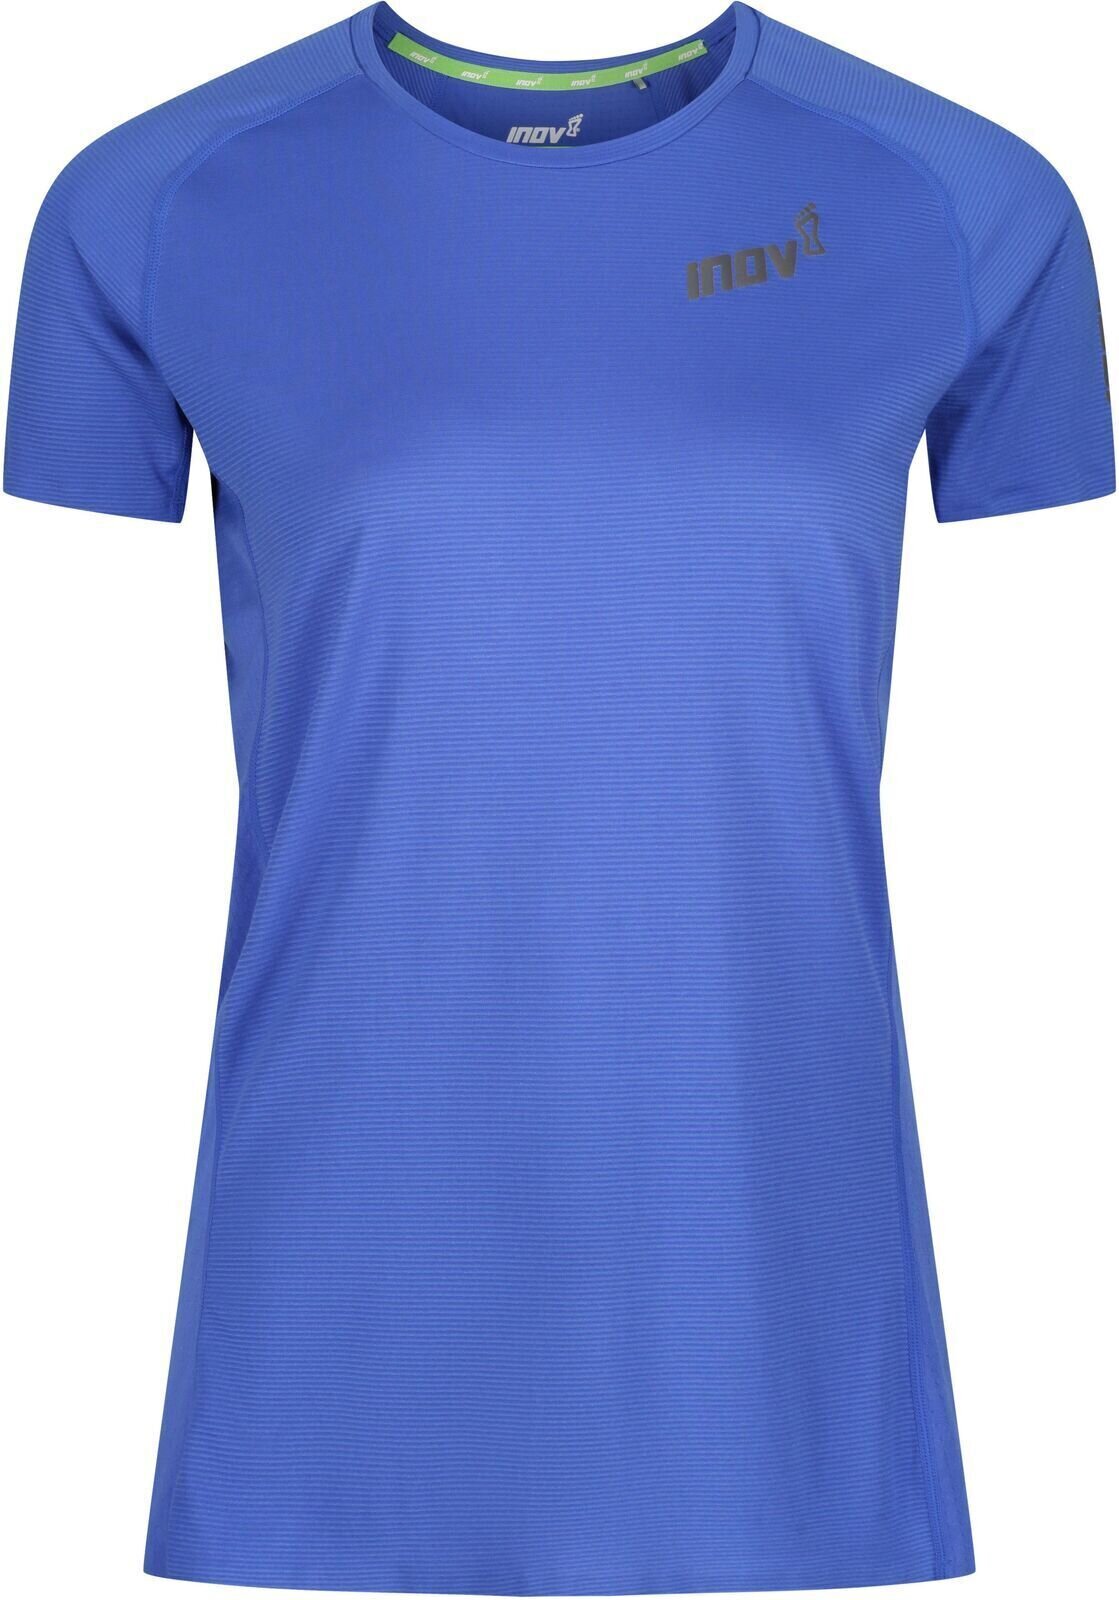 Running t-shirt with short sleeves
 Inov-8 Baso Elite Blue 38 Running t-shirt with short sleeves